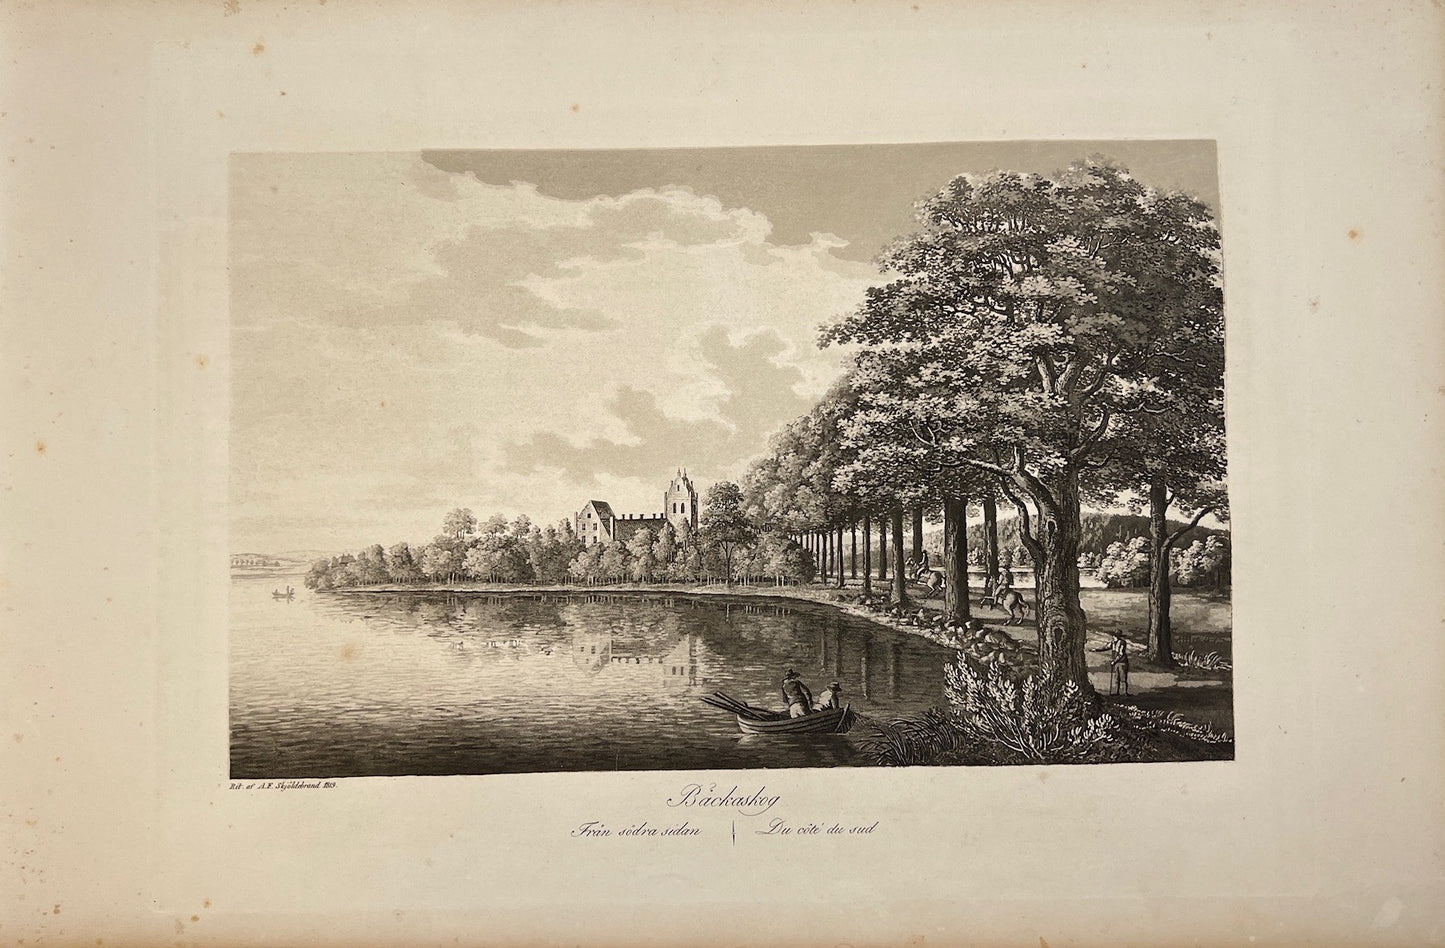 Antique Print - View of Backaskog castle - Kristianstad - Kiaby - Skane - Sweden